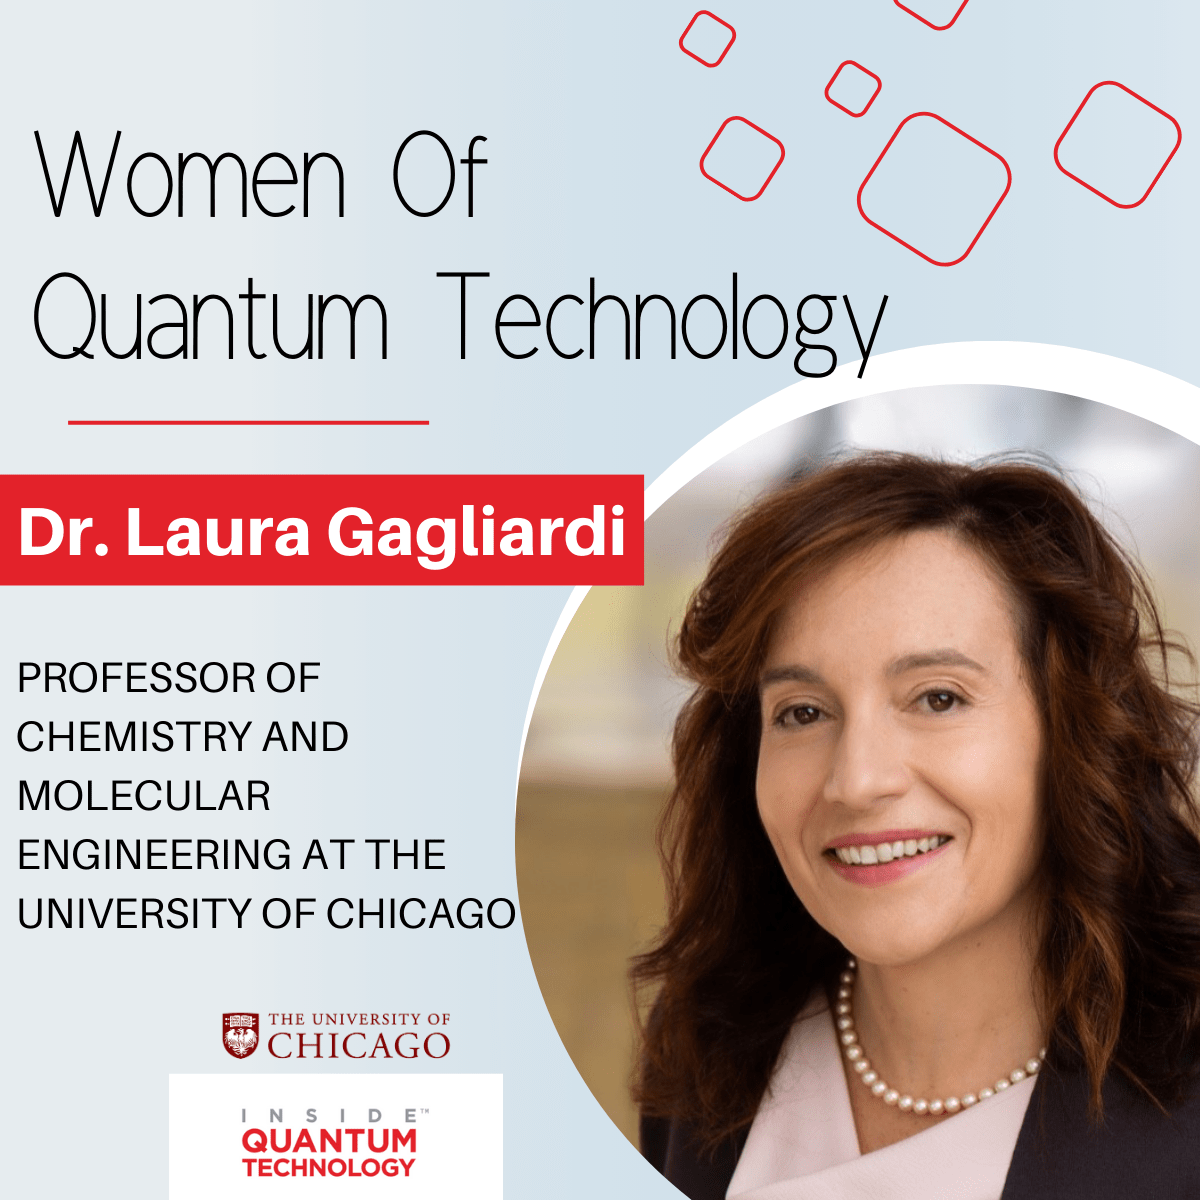 Kvanteteknologiskvinner: Dr. Laura Gagliardi ved University of Chicago - Inne i kvanteteknologi